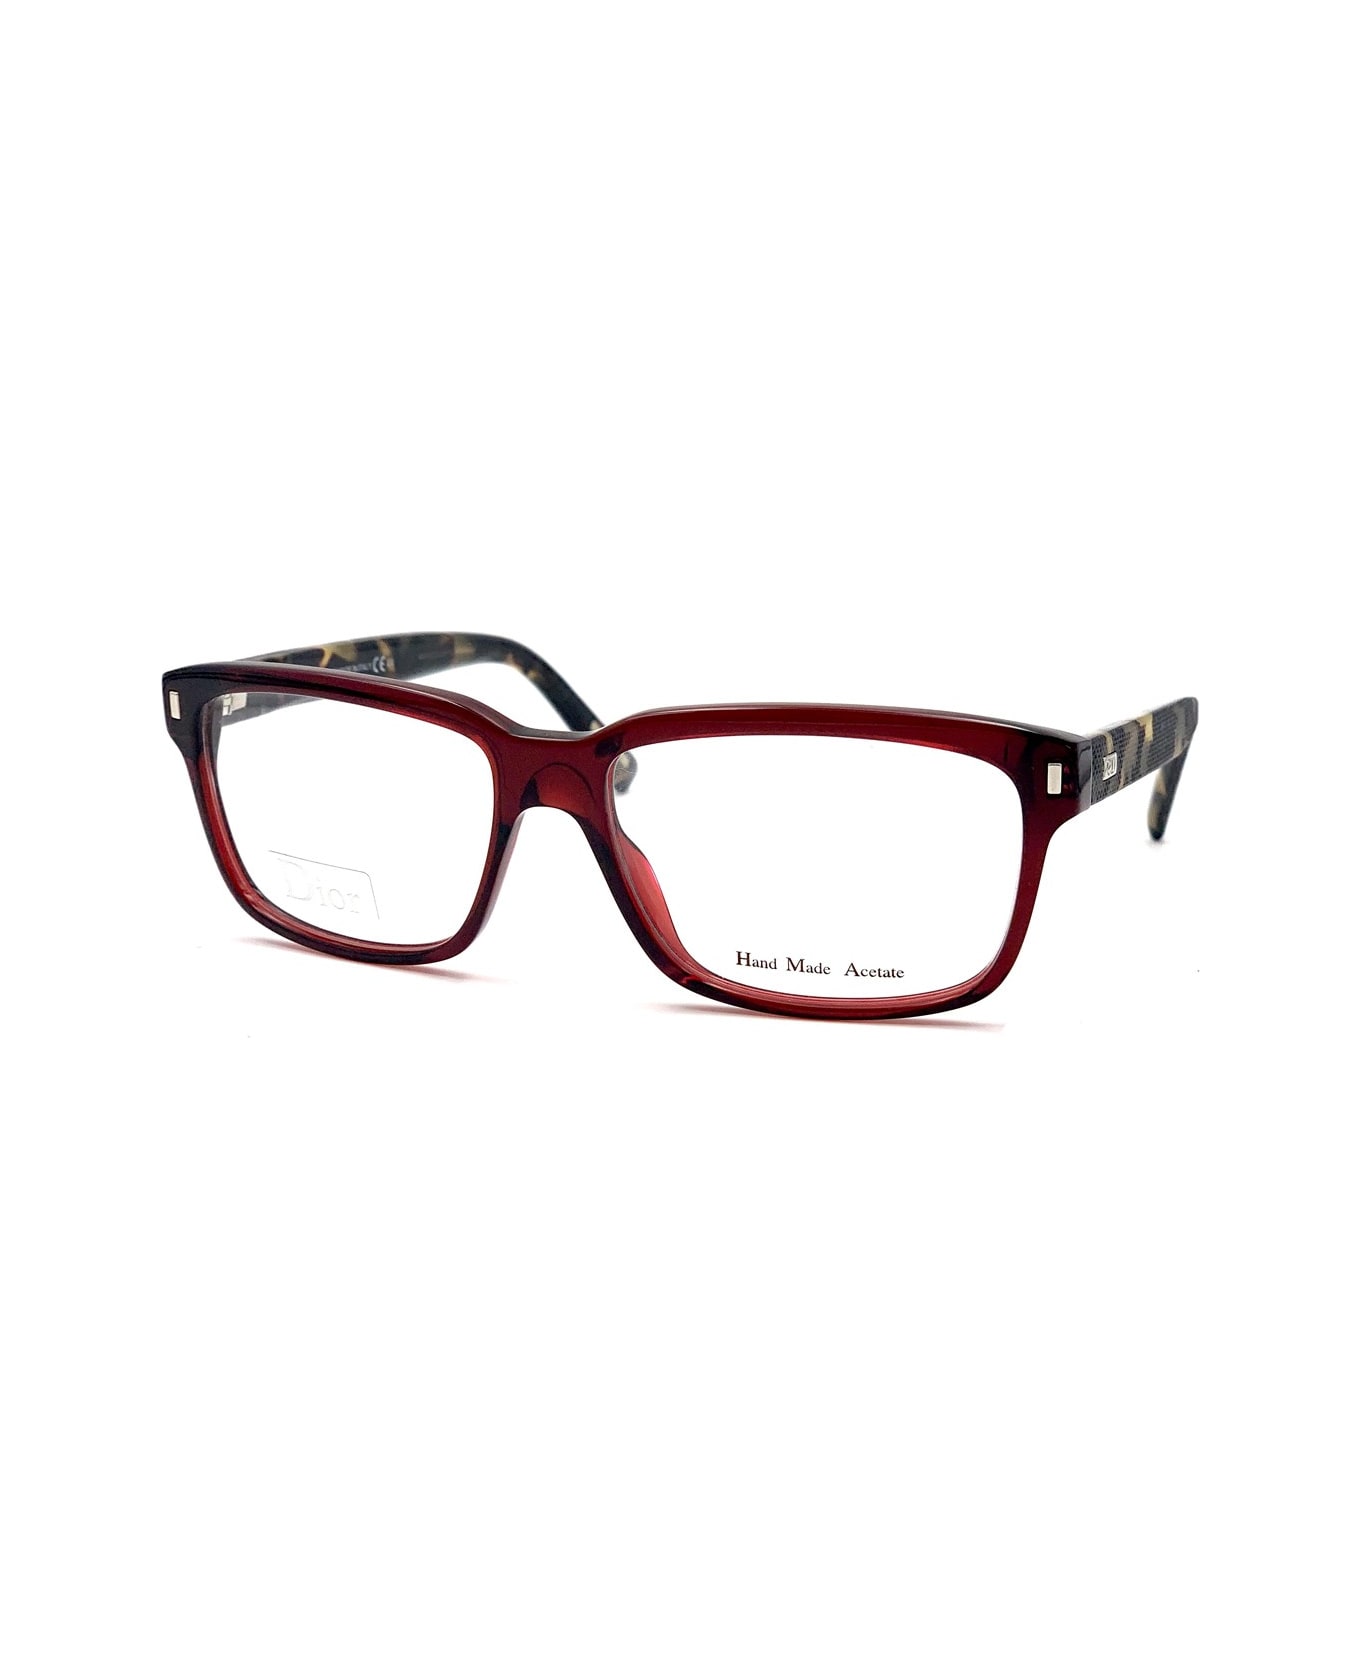 Dior Eyewear Blacktie159 Glasses - Rosso アイウェア